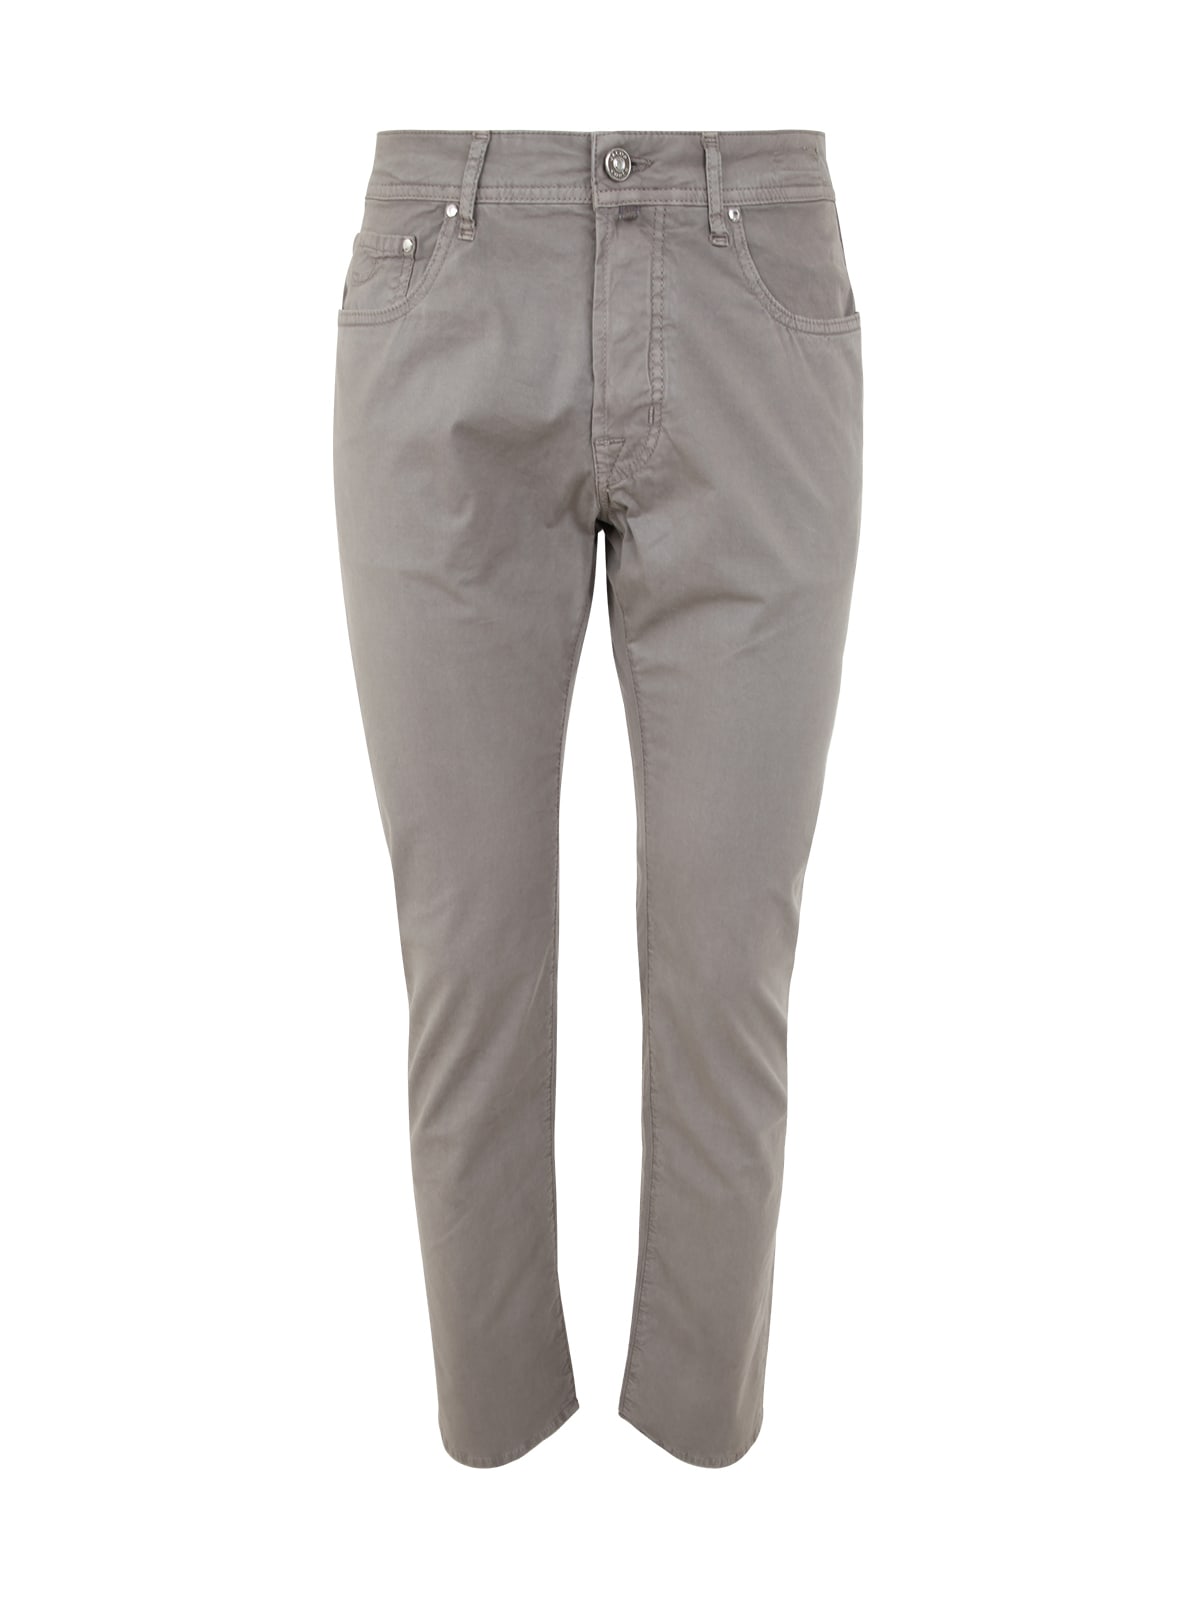 Shop Jacob Cohen Bard Slim Fit Five Pocket Jeans In Elephant Grey